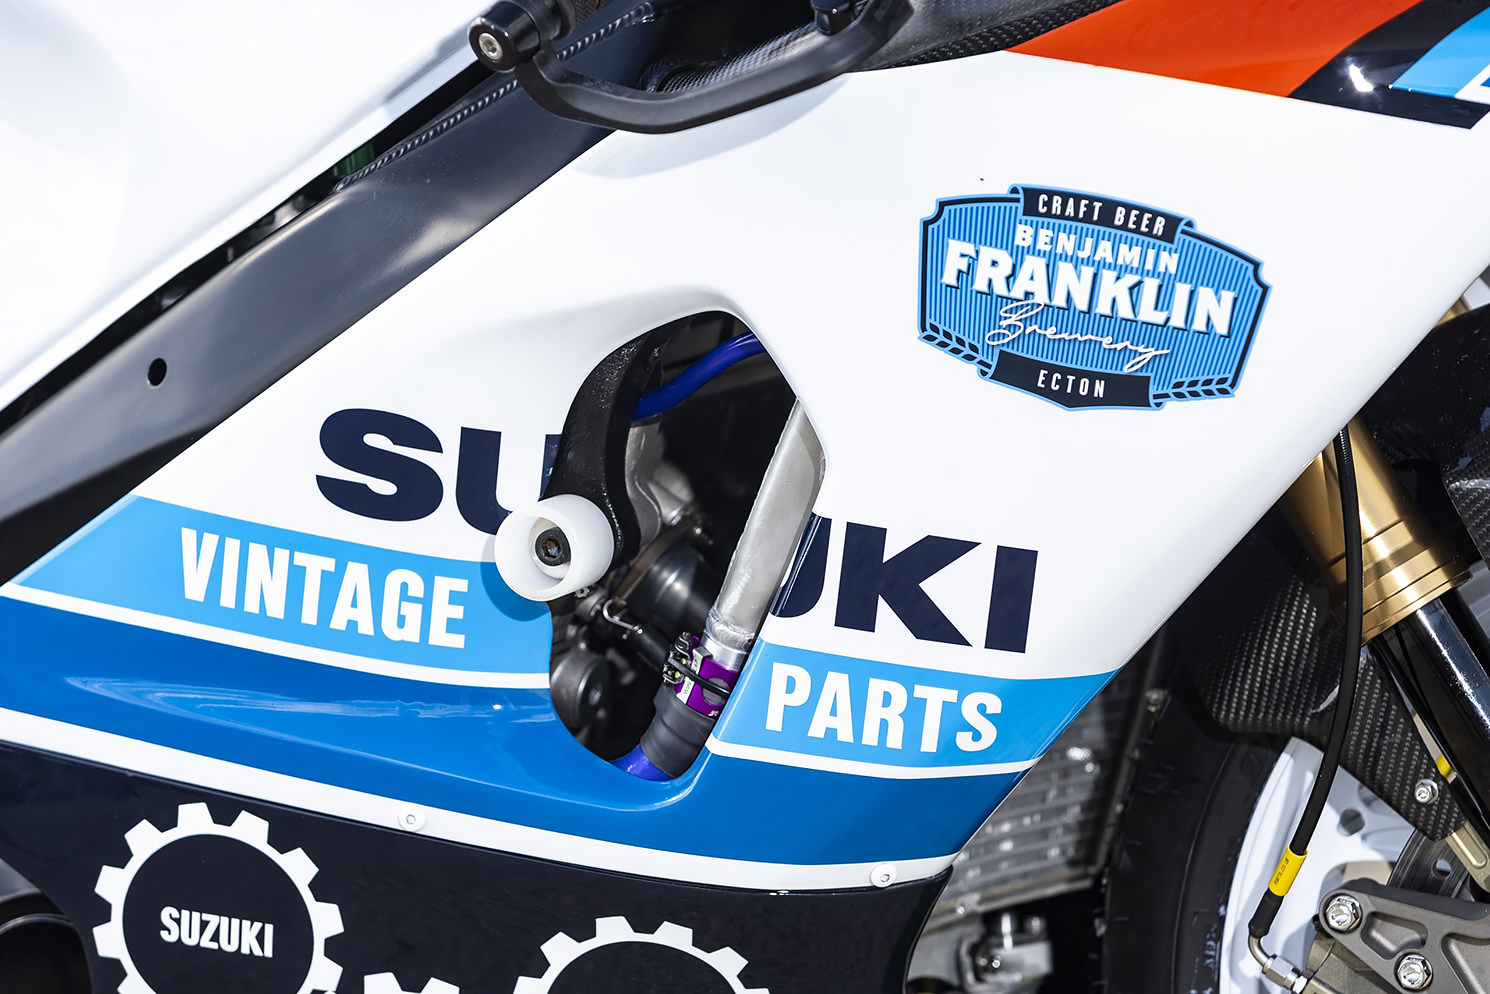 Team Classic Suzuki GSX-R1000 endurance race bike